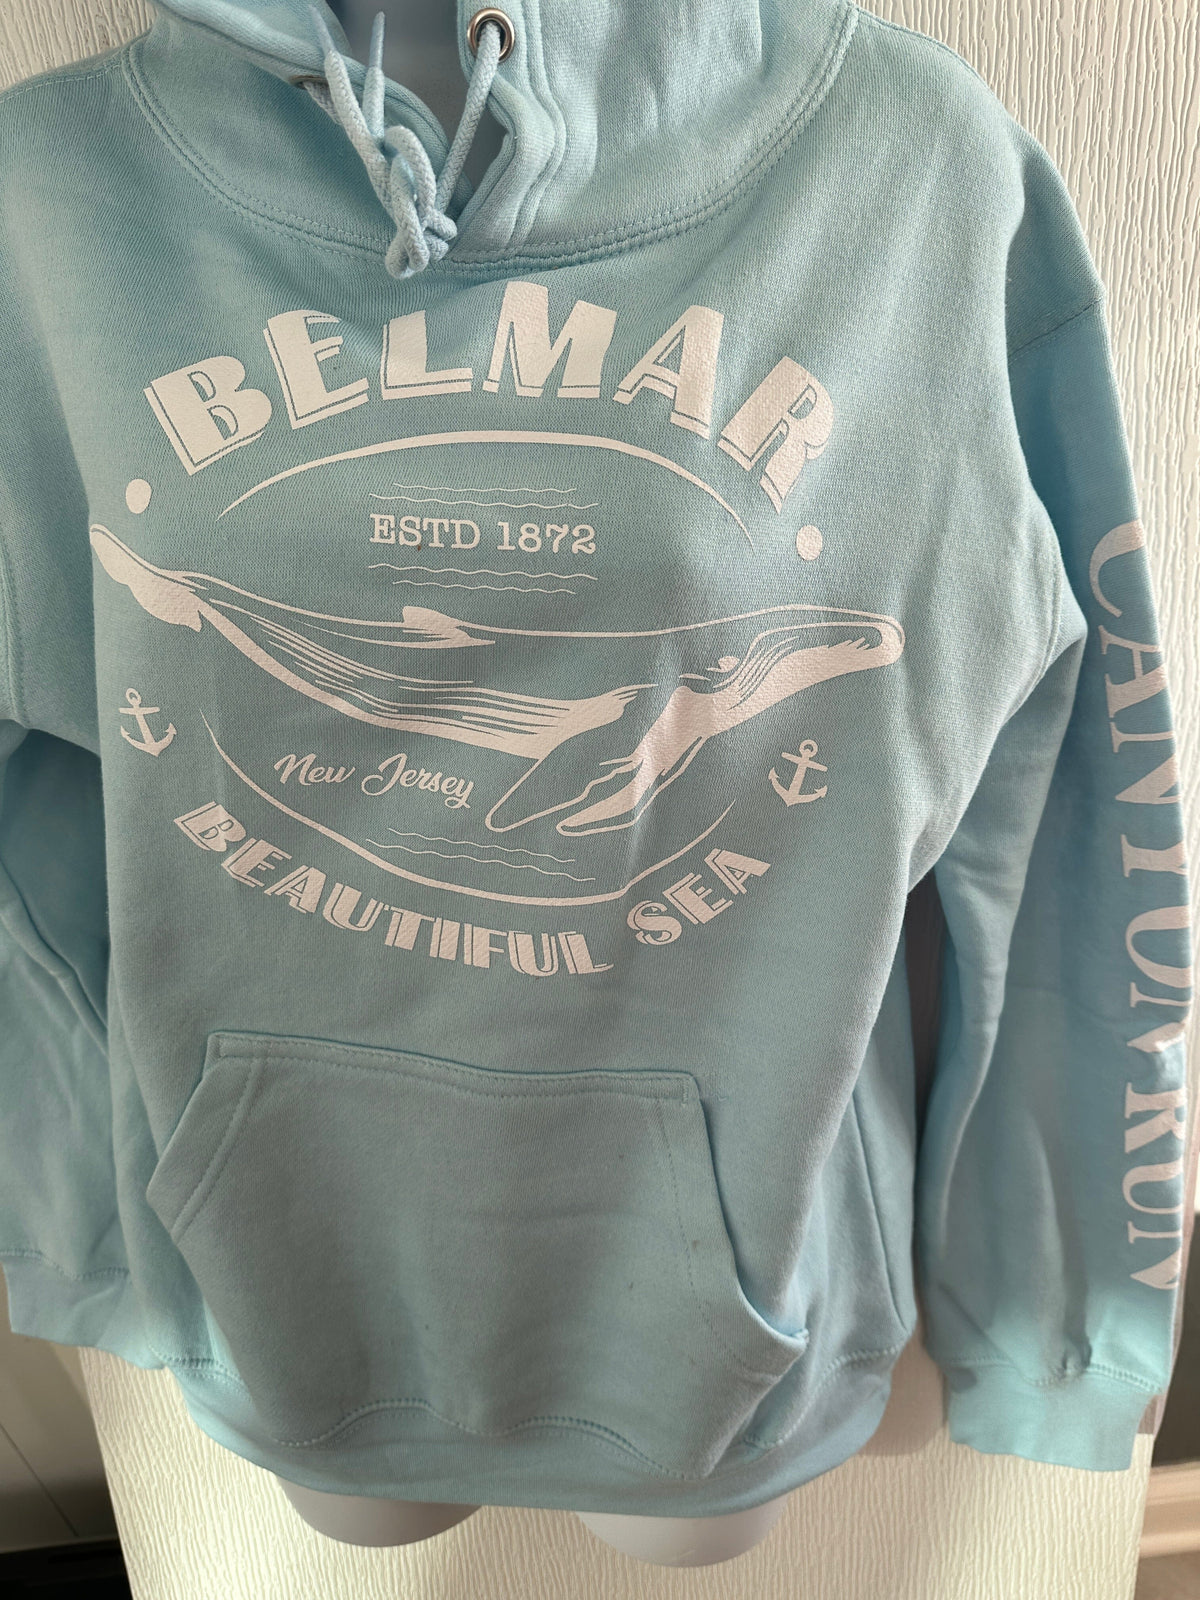 150th Anniversary Belmar Sweatshirt Whale Print Bill McKim Photography -Jersey Shore whale watch tours 